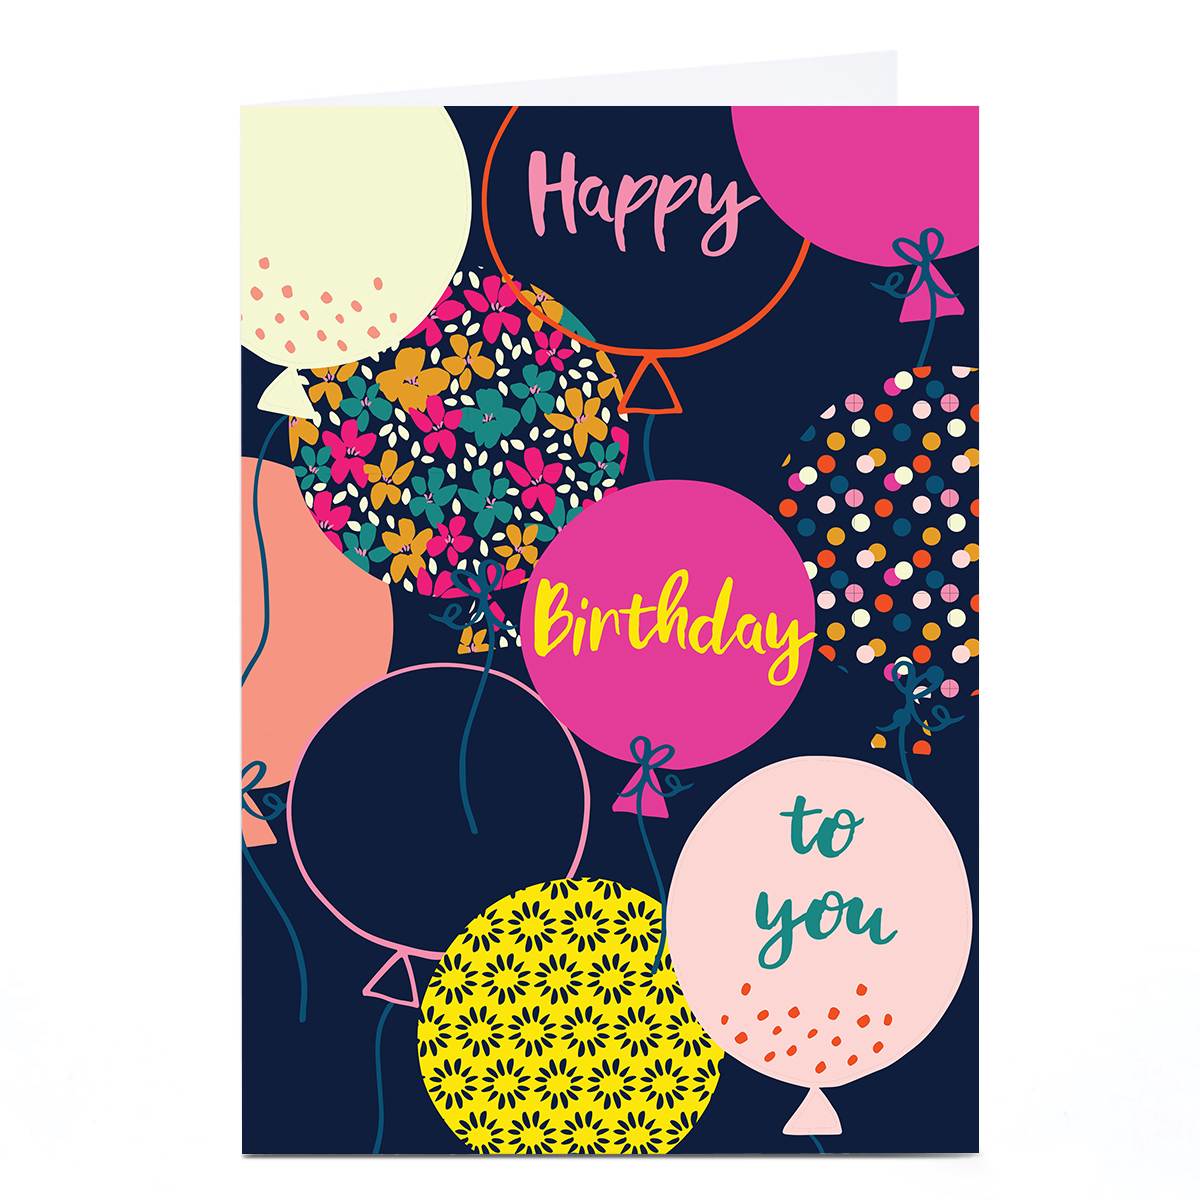 Buy Personalised Sazerelli Birthday Card - Balloons for GBP 2.29 | Card ...